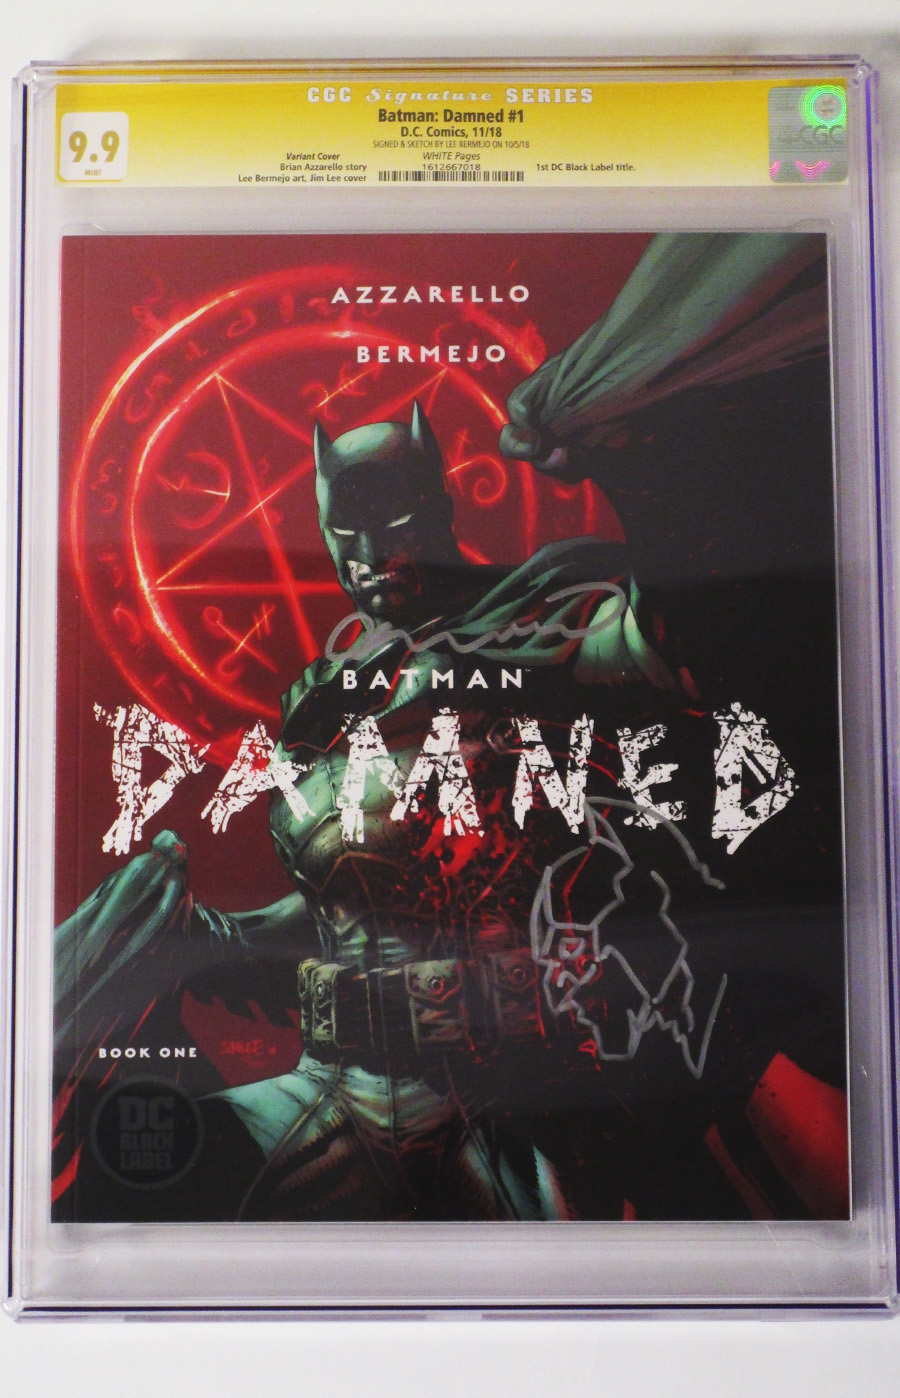 Batman Damned #1 Cover K Variant Jim Lee Cover Signed & Sketched By Lee Bermejo CGC 9.9